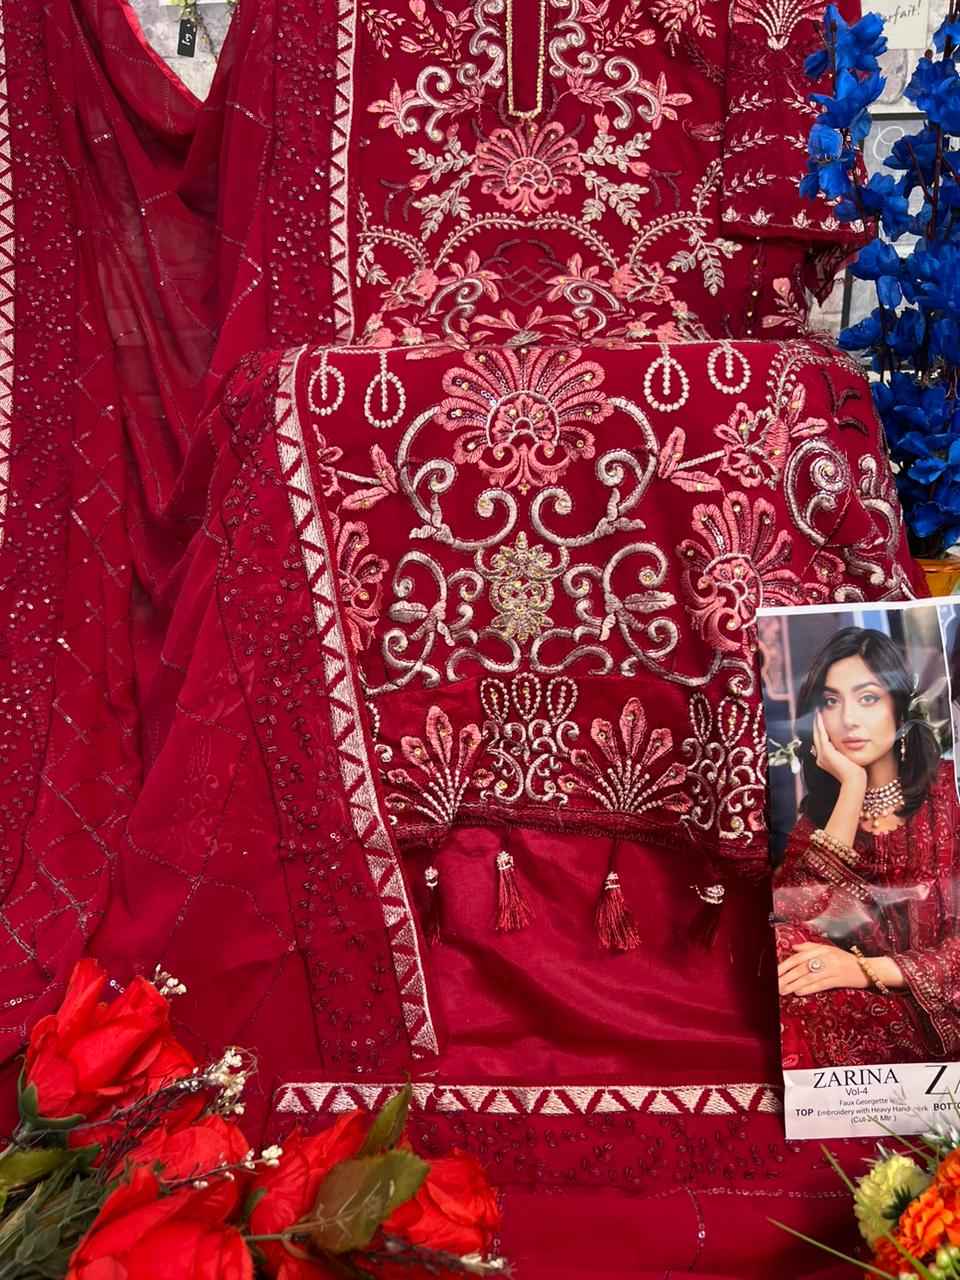 Zaha Zarina Vol-4 Georgette Dress Material (3 pcs Catalogue)